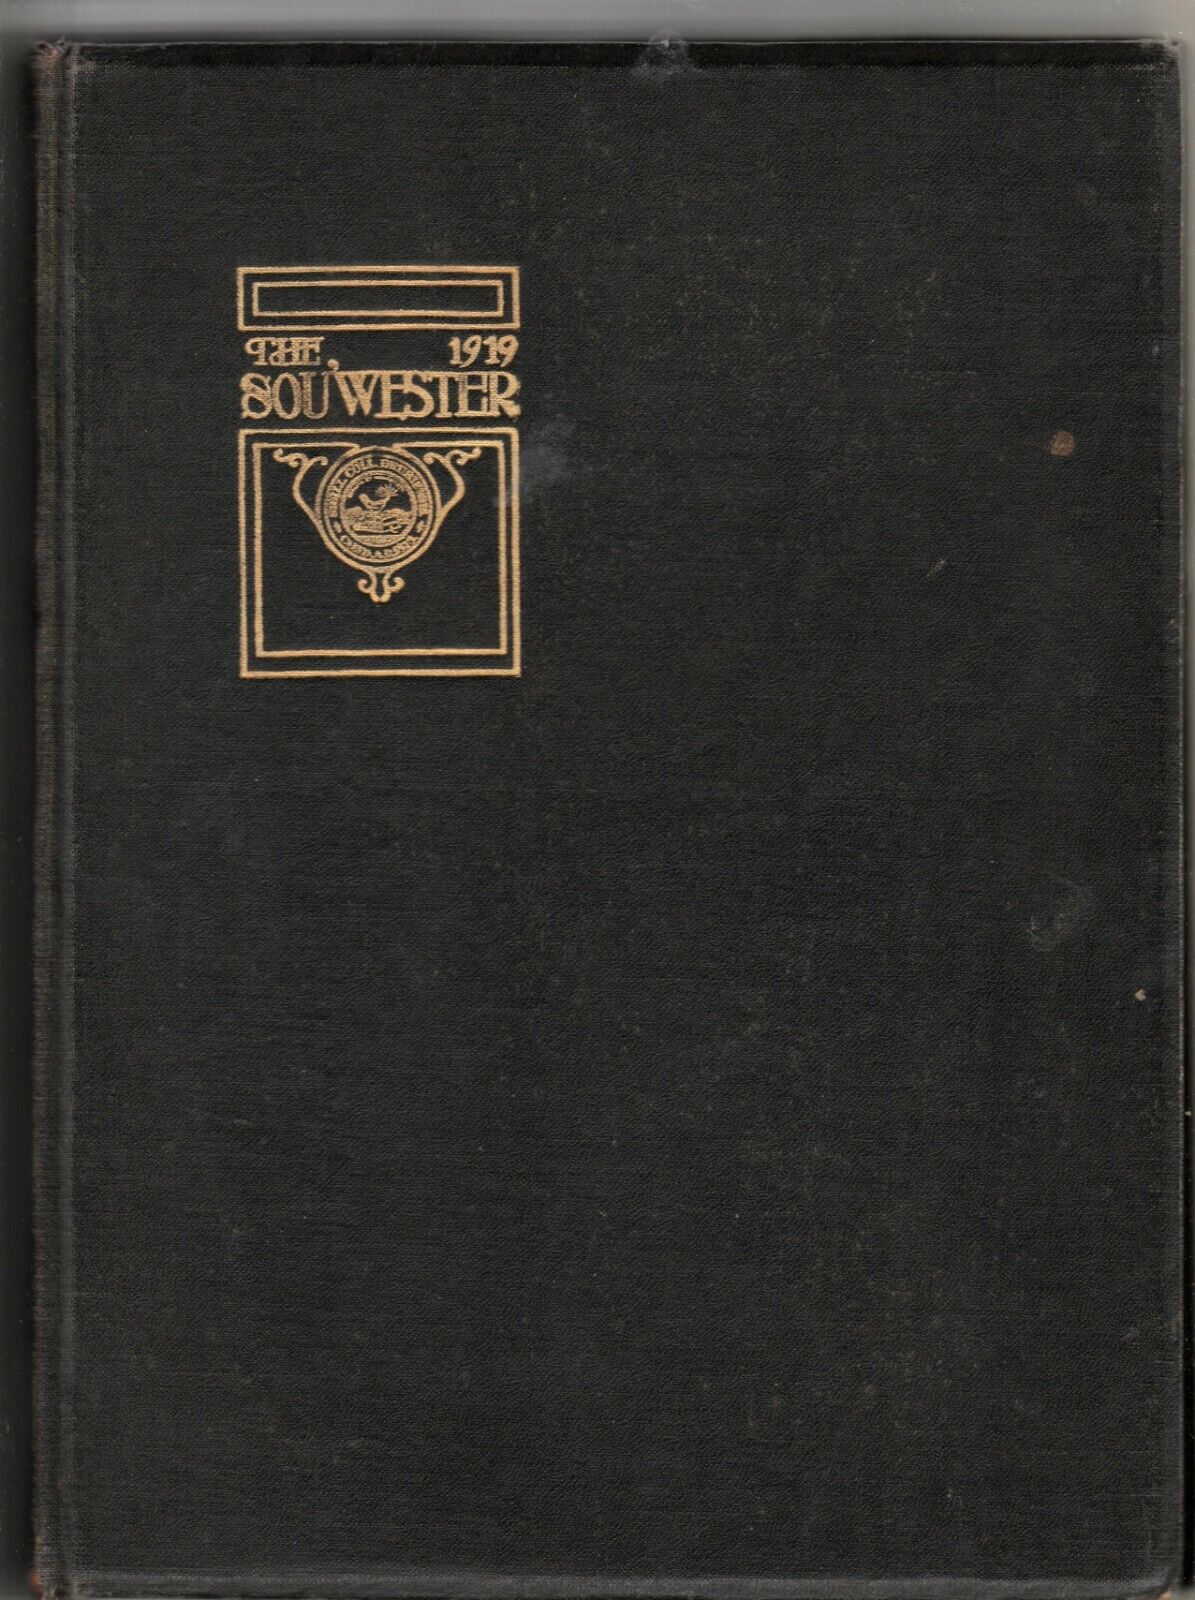 1919 Drury College Yearbook, Sout\'Wester, Springfield, Missouri